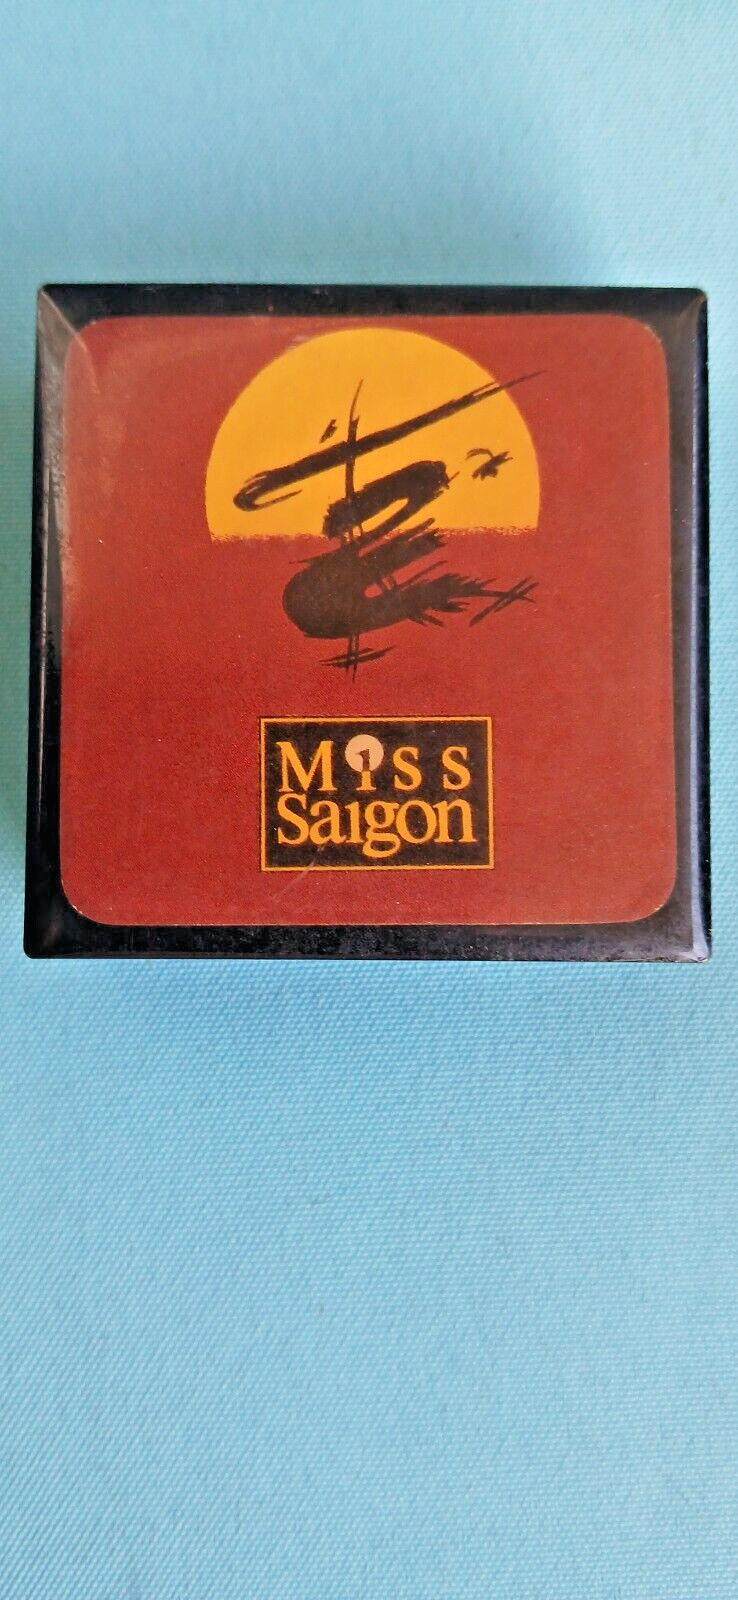 1988 miss saigon trinket box 2 x 2 inch